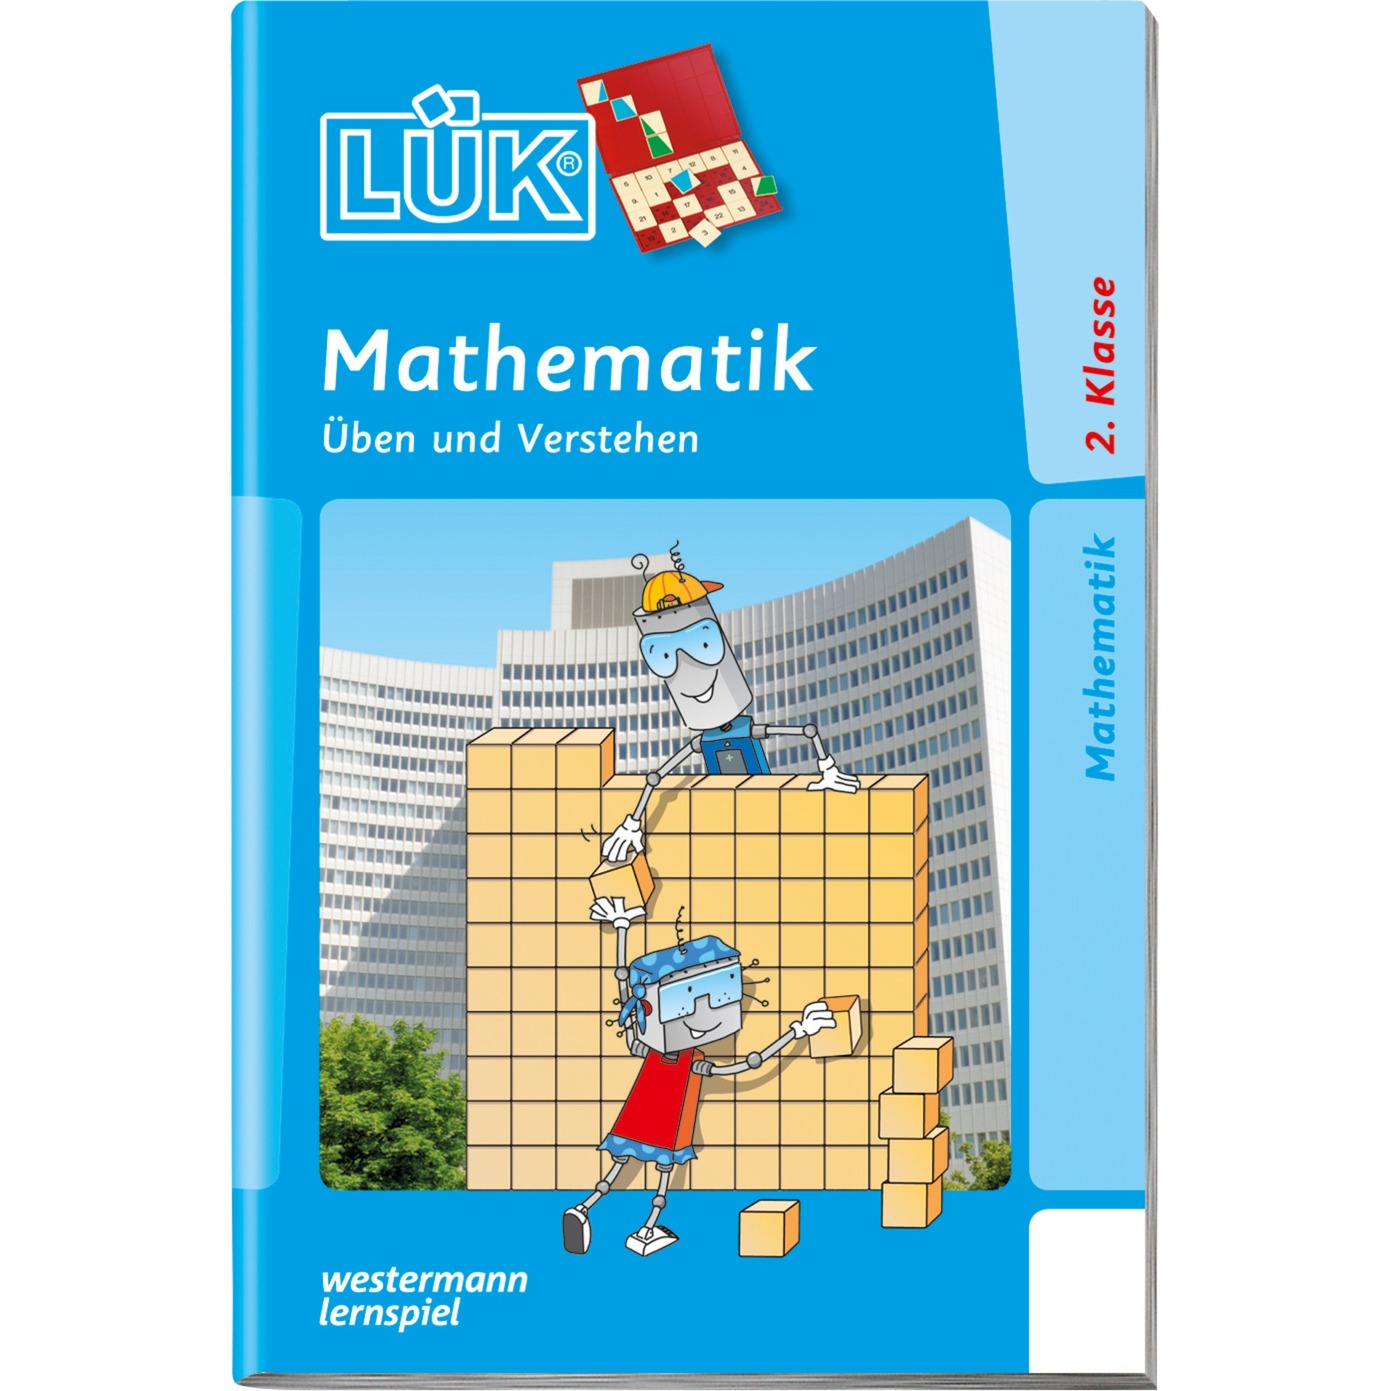 Mathematik 2. Klasse Üben und Verstehen książka dla dzieci, Książki edukacyjne